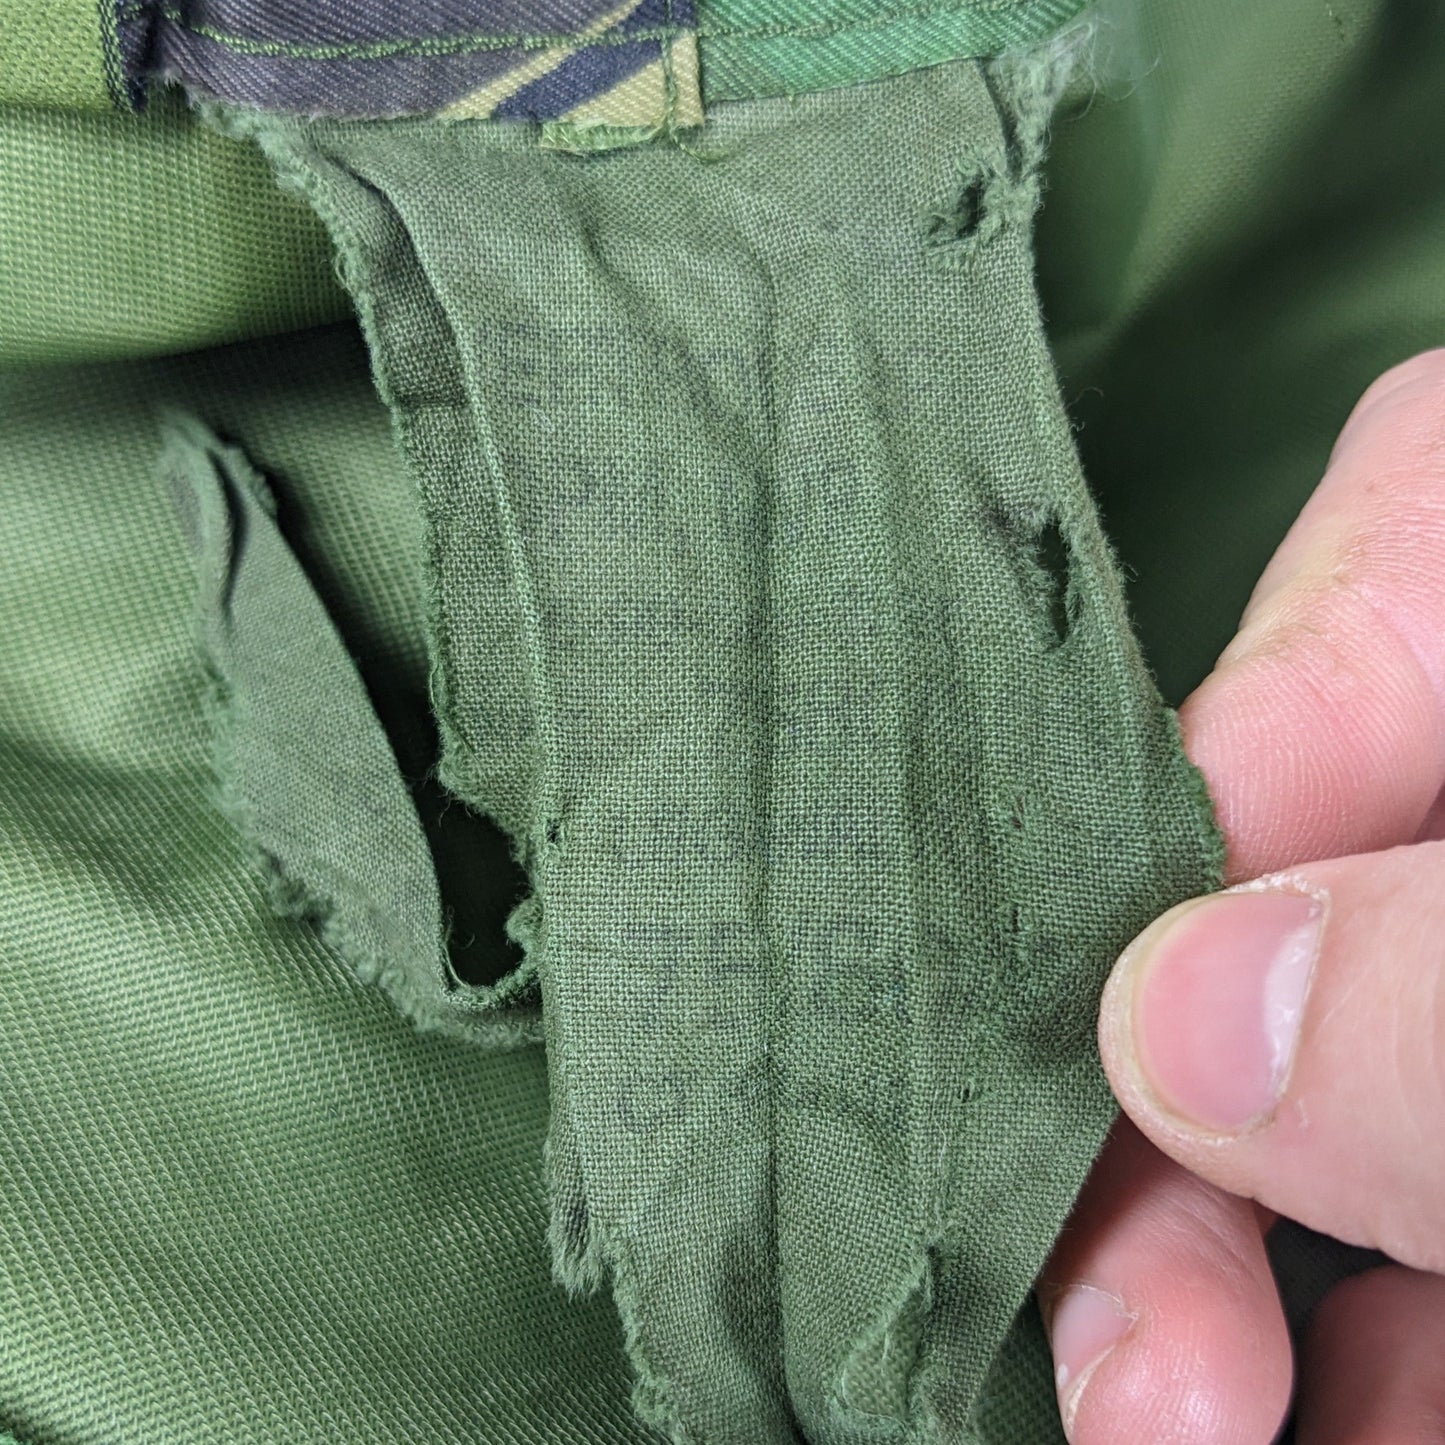 British Army Woodland DPM Camouflage MVP Waterproof Trousers